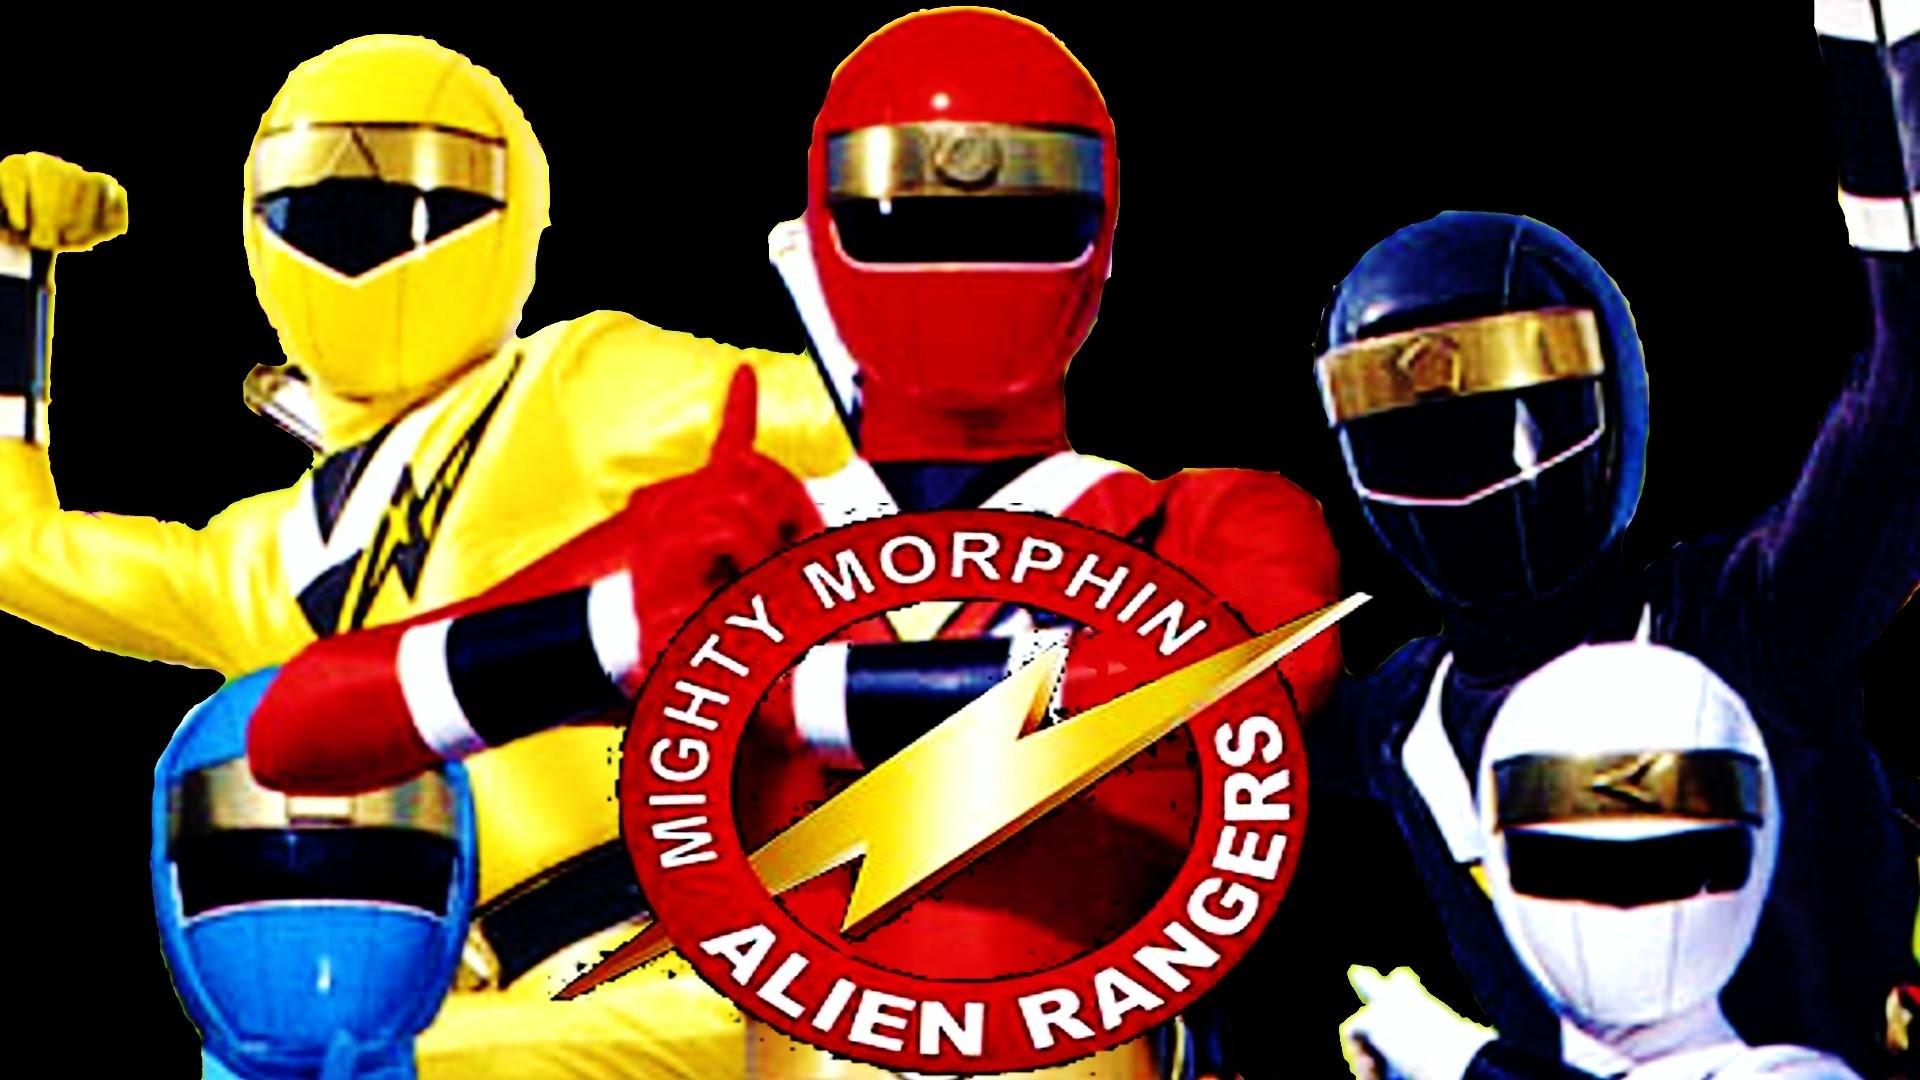 Mighty Morphin Power Rangers Wallpaper